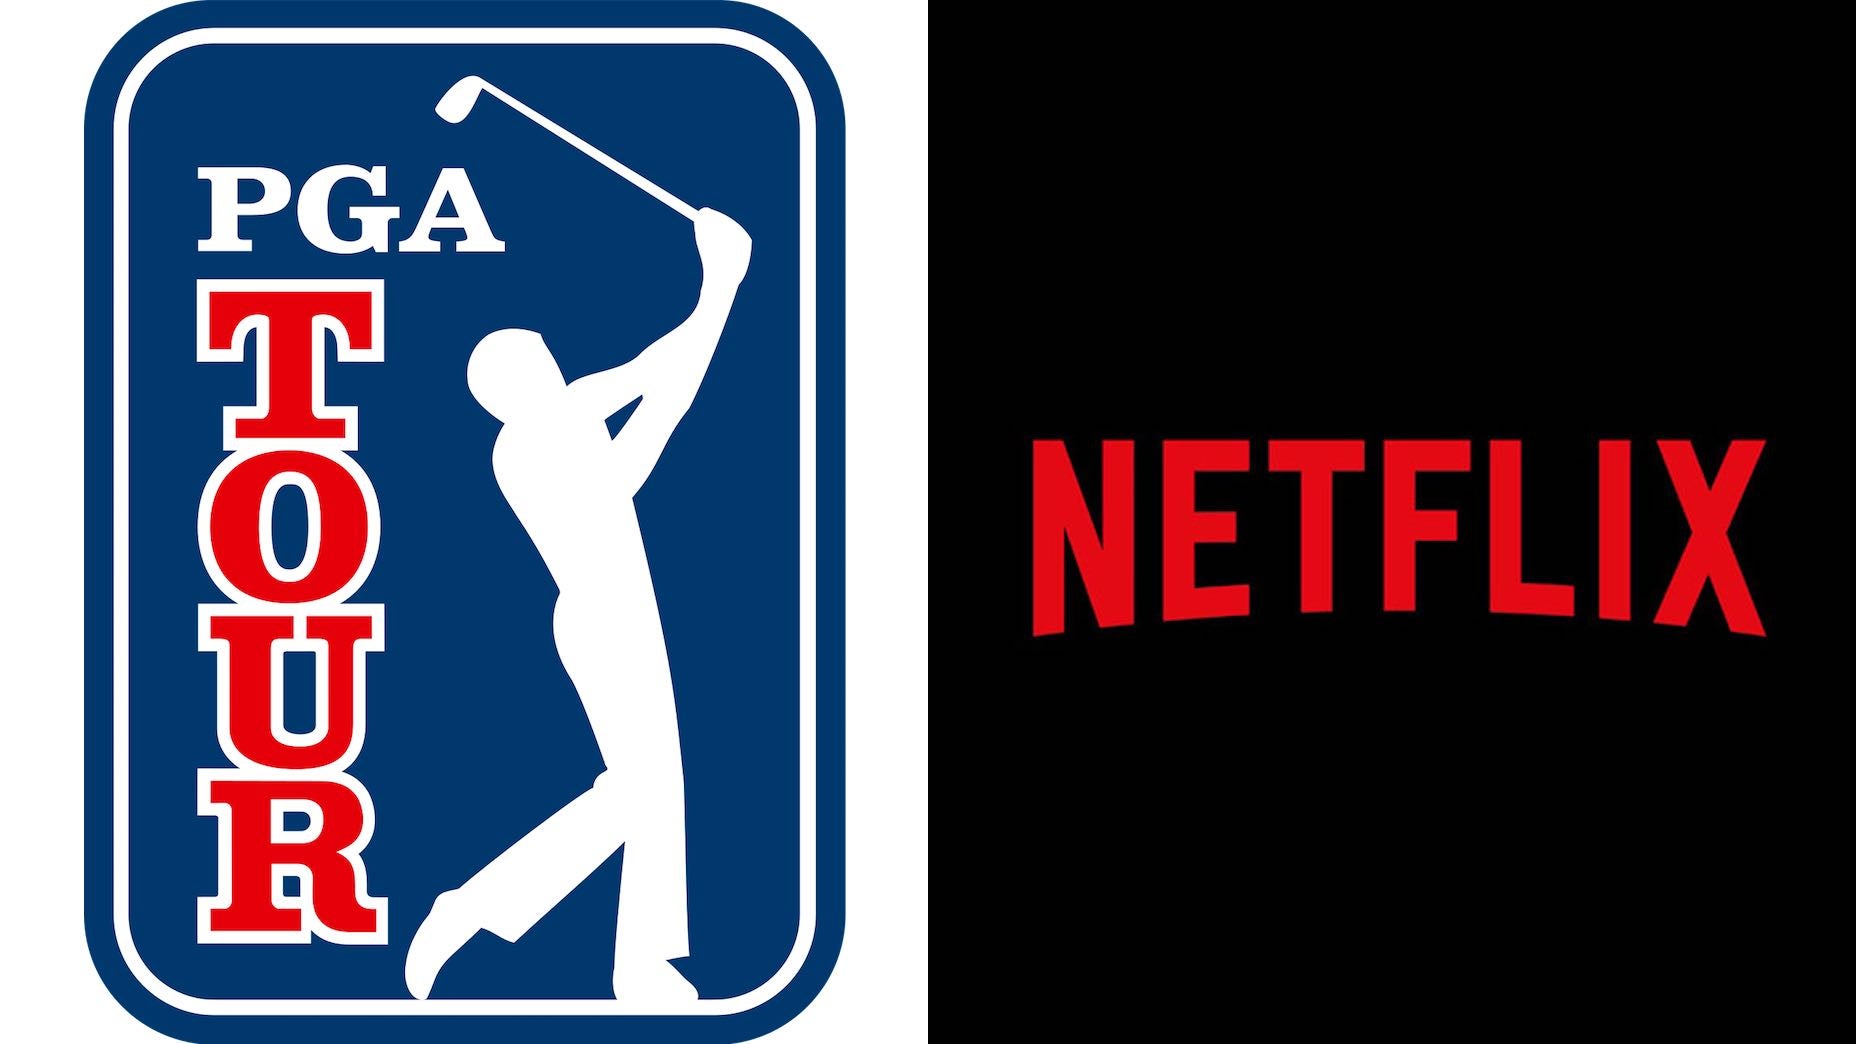 Netflix to launch PGA Tour docuseries offering inside look